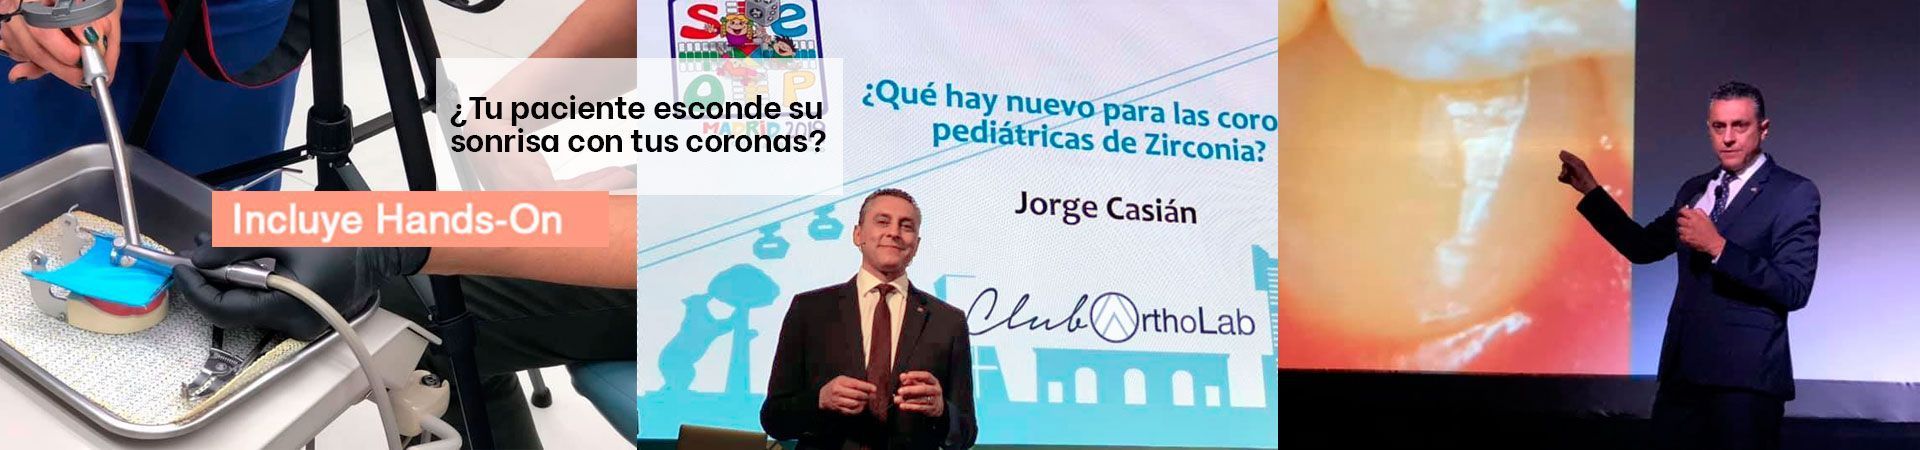 Doctor Jorge Casian Odontopediatria NuSmile Coronas Zirconia Ponente OrthoLab Formación